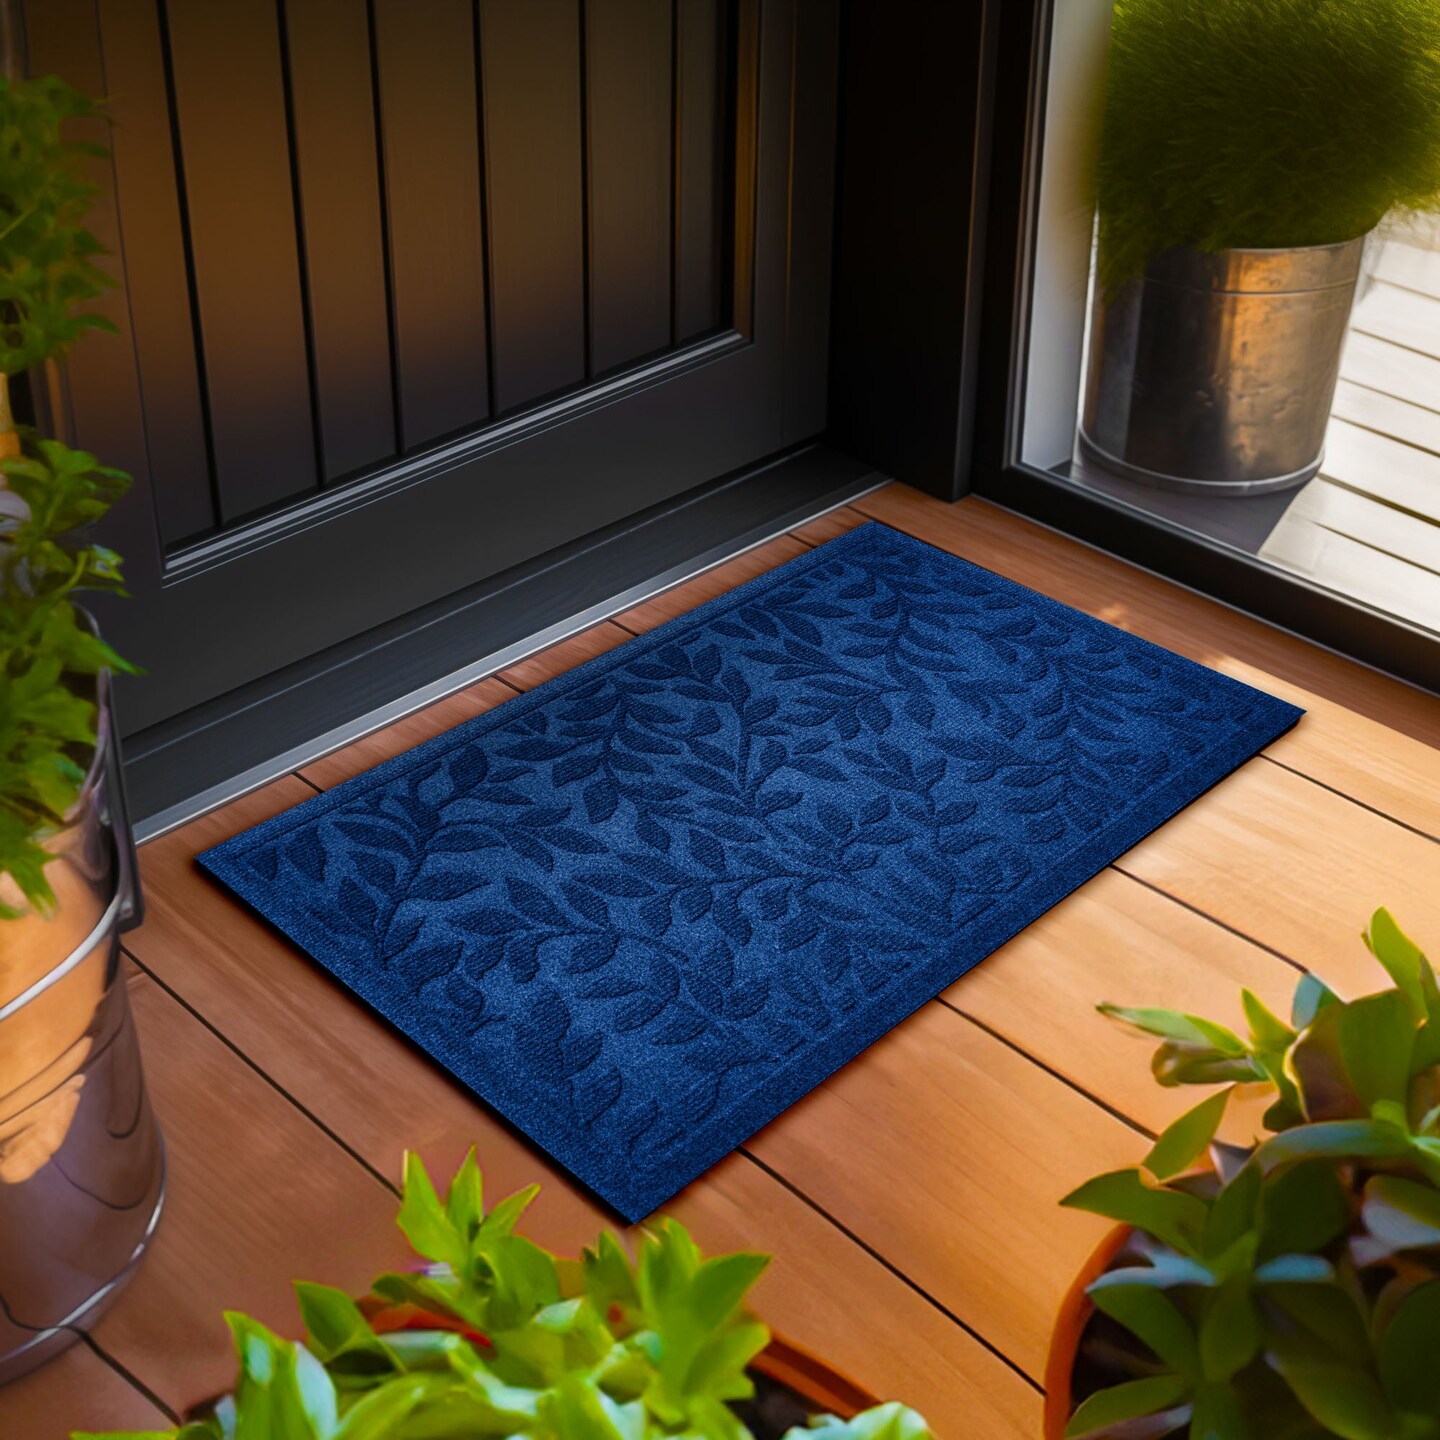 G128 Home Entrance Blue Leaves Door Mat | 23x35 In | Thick Absorbent Natural Rubber Non Slip, Indoor/Outdoor, Easy Clean, Welcome Mats for Front Door/Patio/Garage